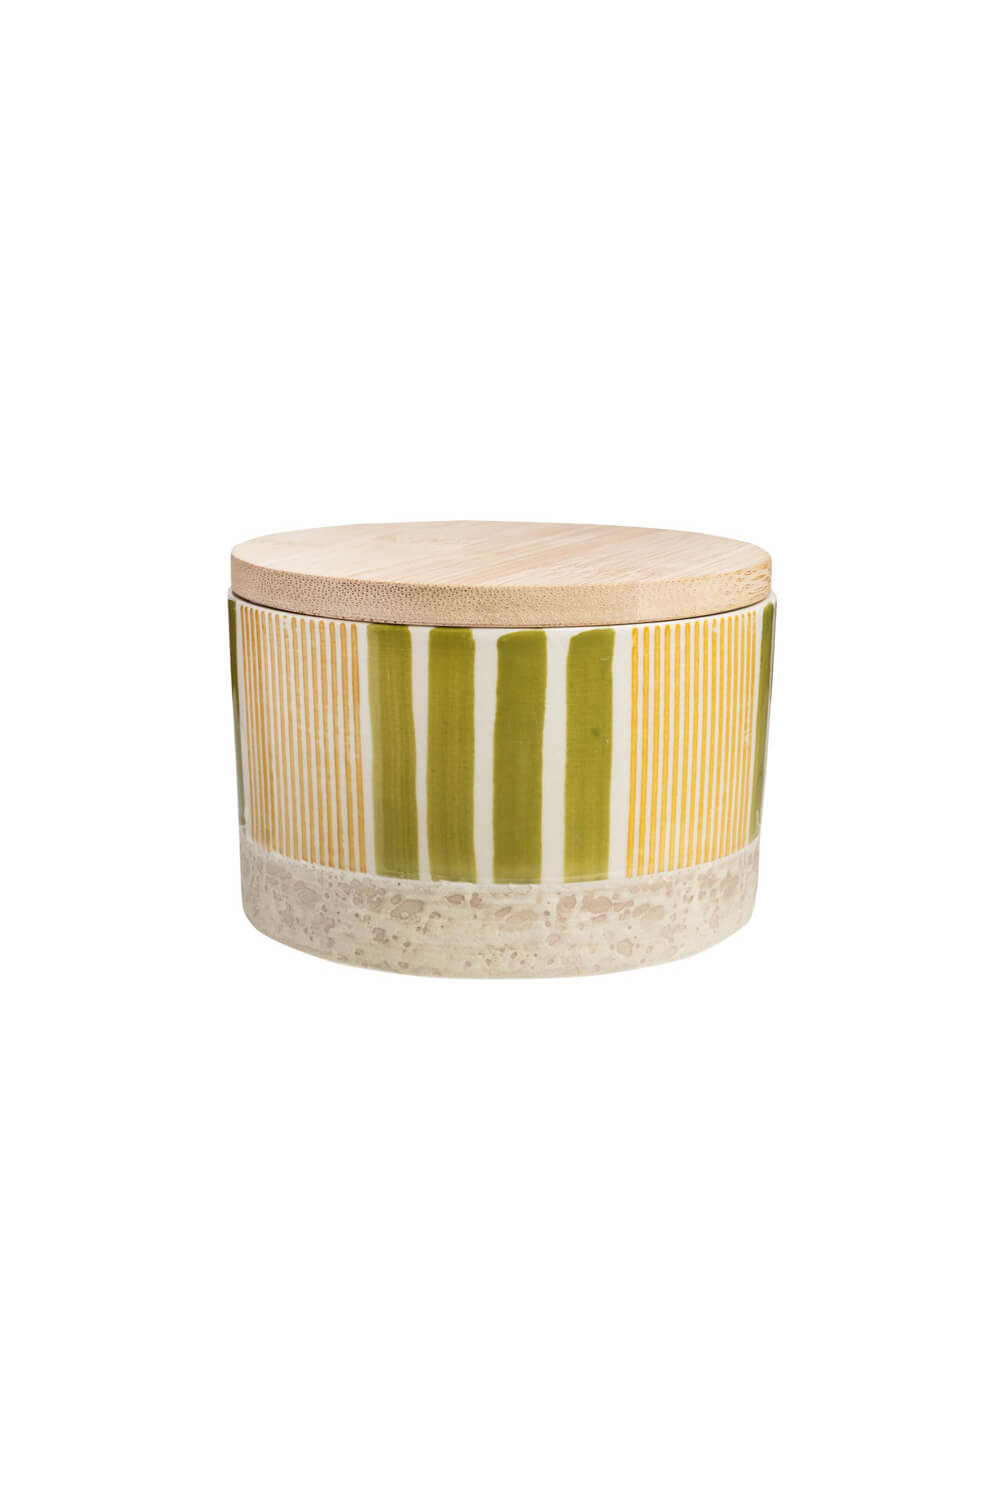 Storage Jar in Green & Yellow Stripes - 10 cm